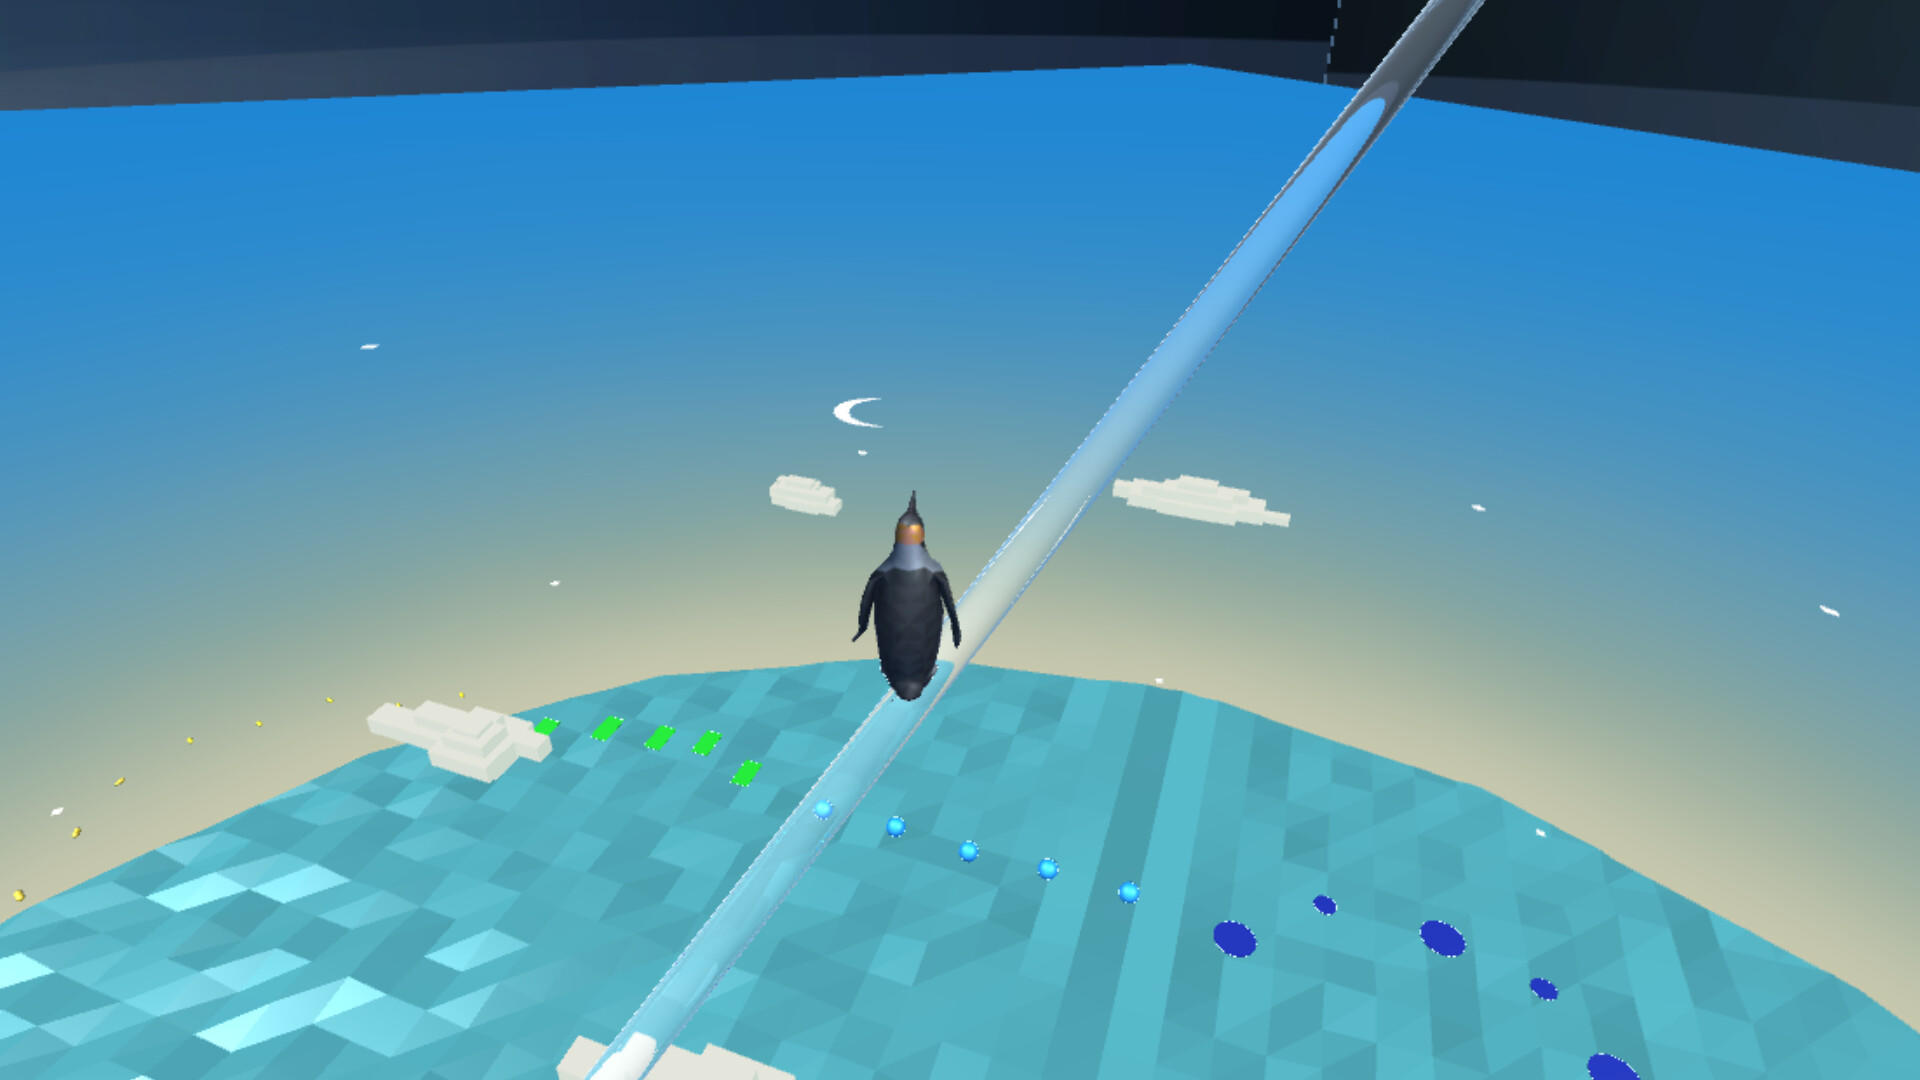 Screenshot 1 of Jump Penguin វគ្គផ្តាច់ព្រ័ត្រ 